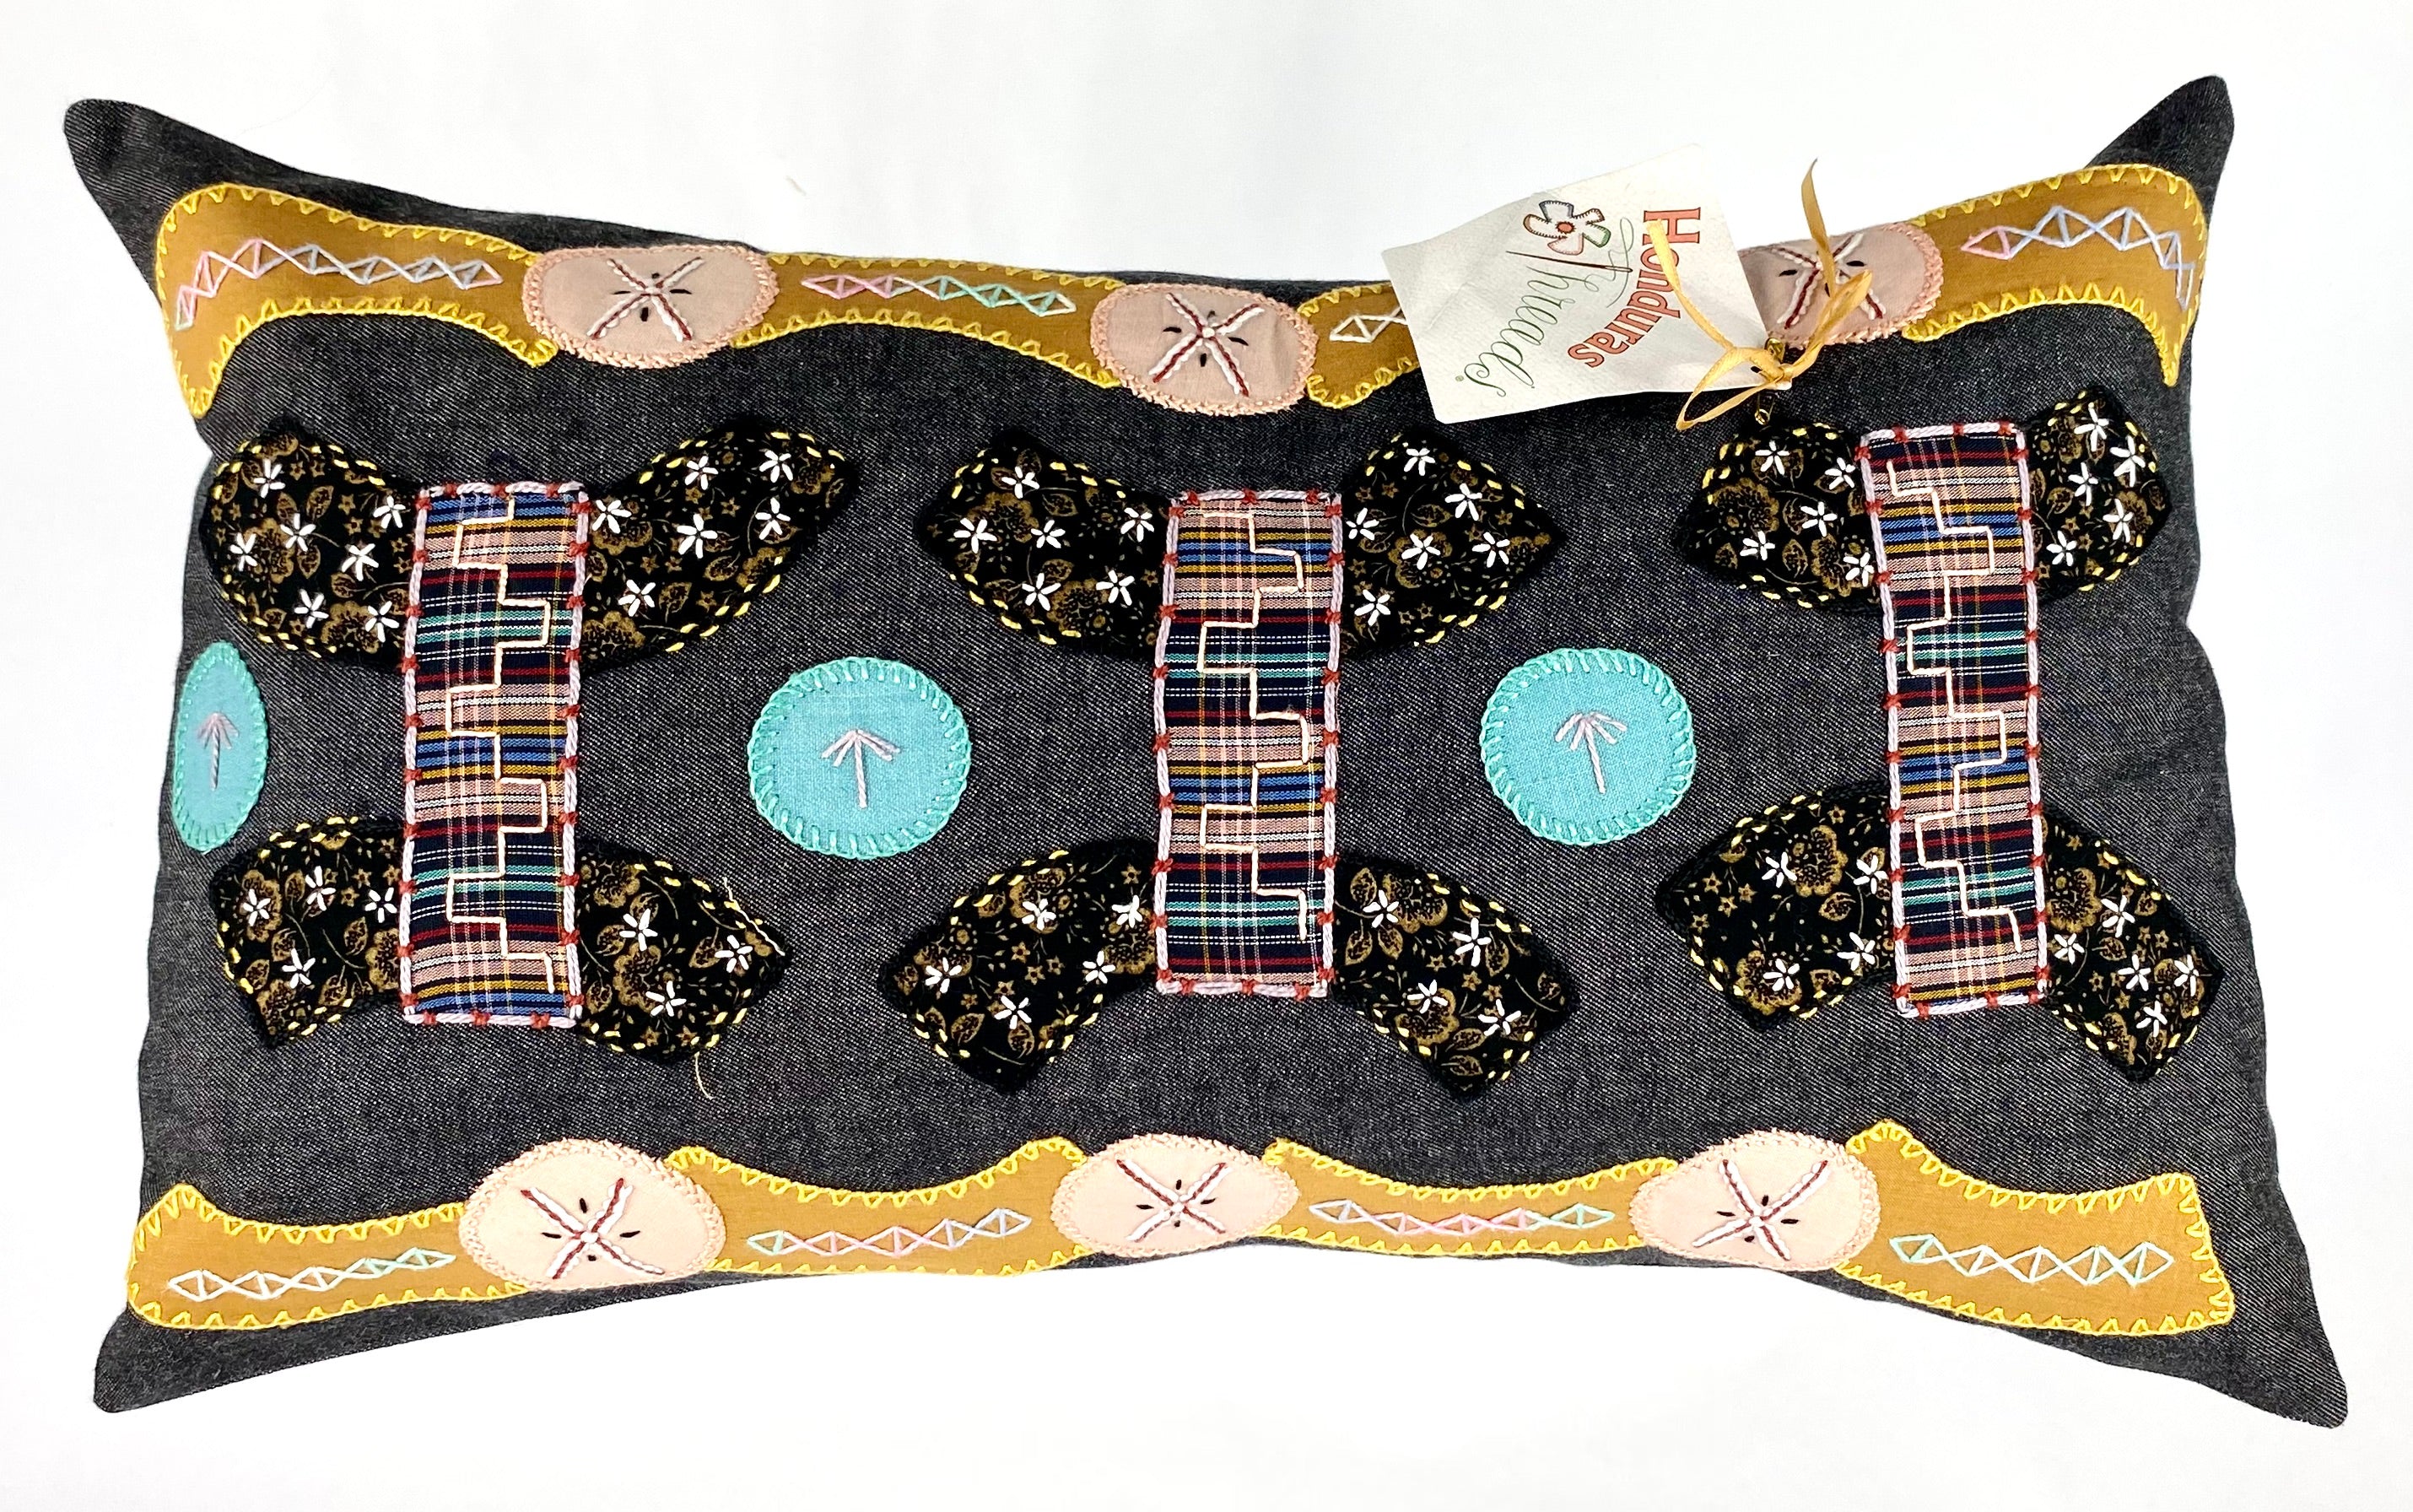 Piedras Lunar Design Embroidered Pillow on black Honduras Threads